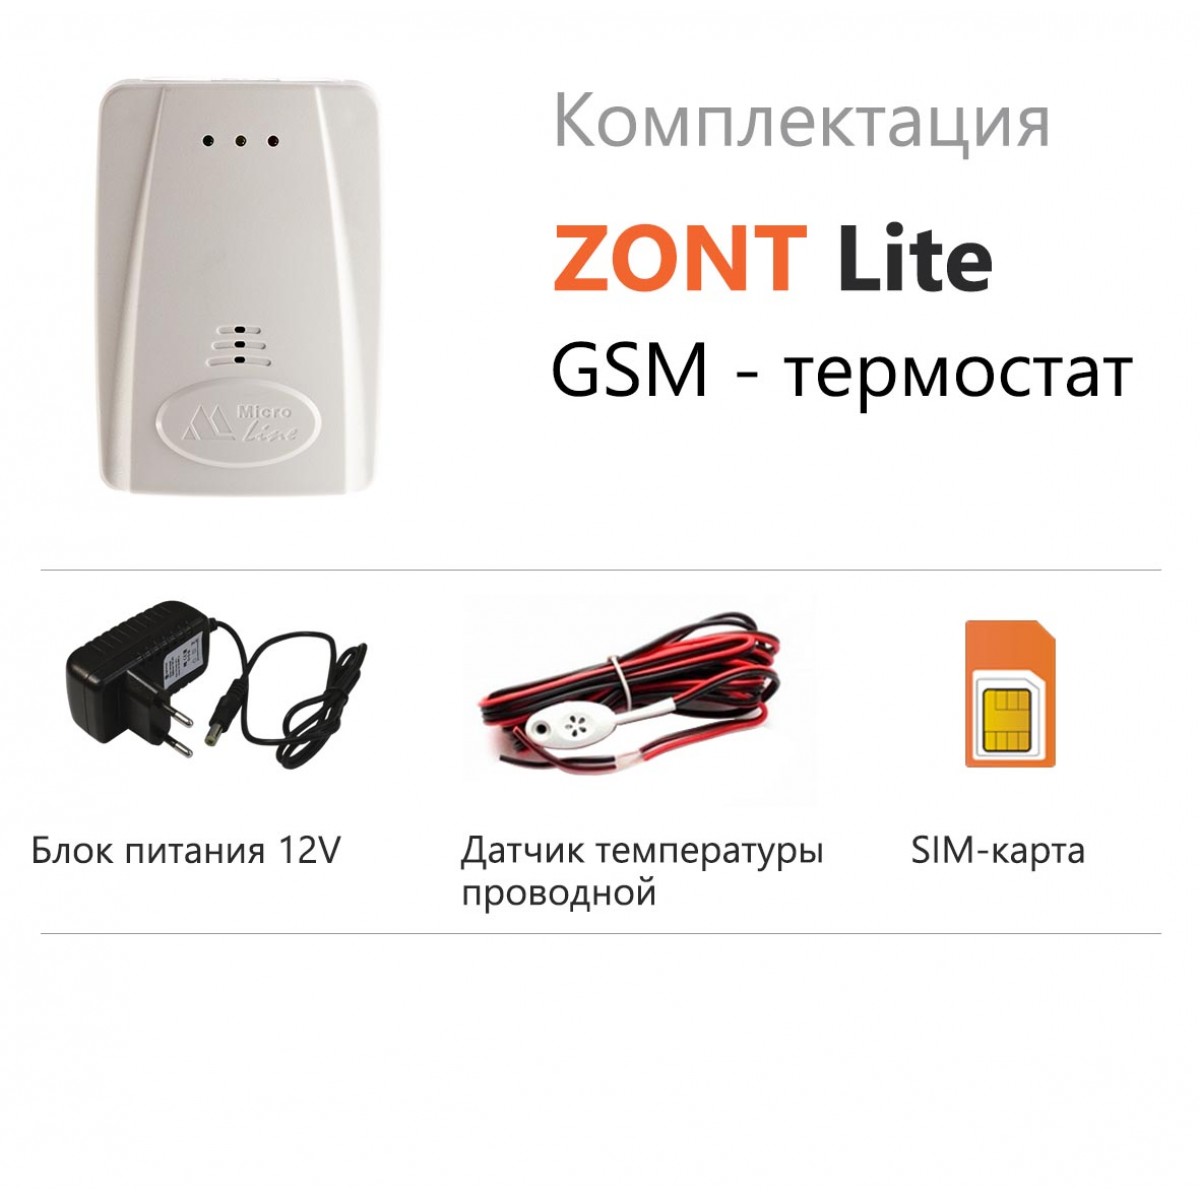 Zont hotel. GSM термостат Zont Lite 737. Термостаты GSM Zont Lite. Wi-Fi термостат Zont h-2. Термостат Zont h-1v.02.